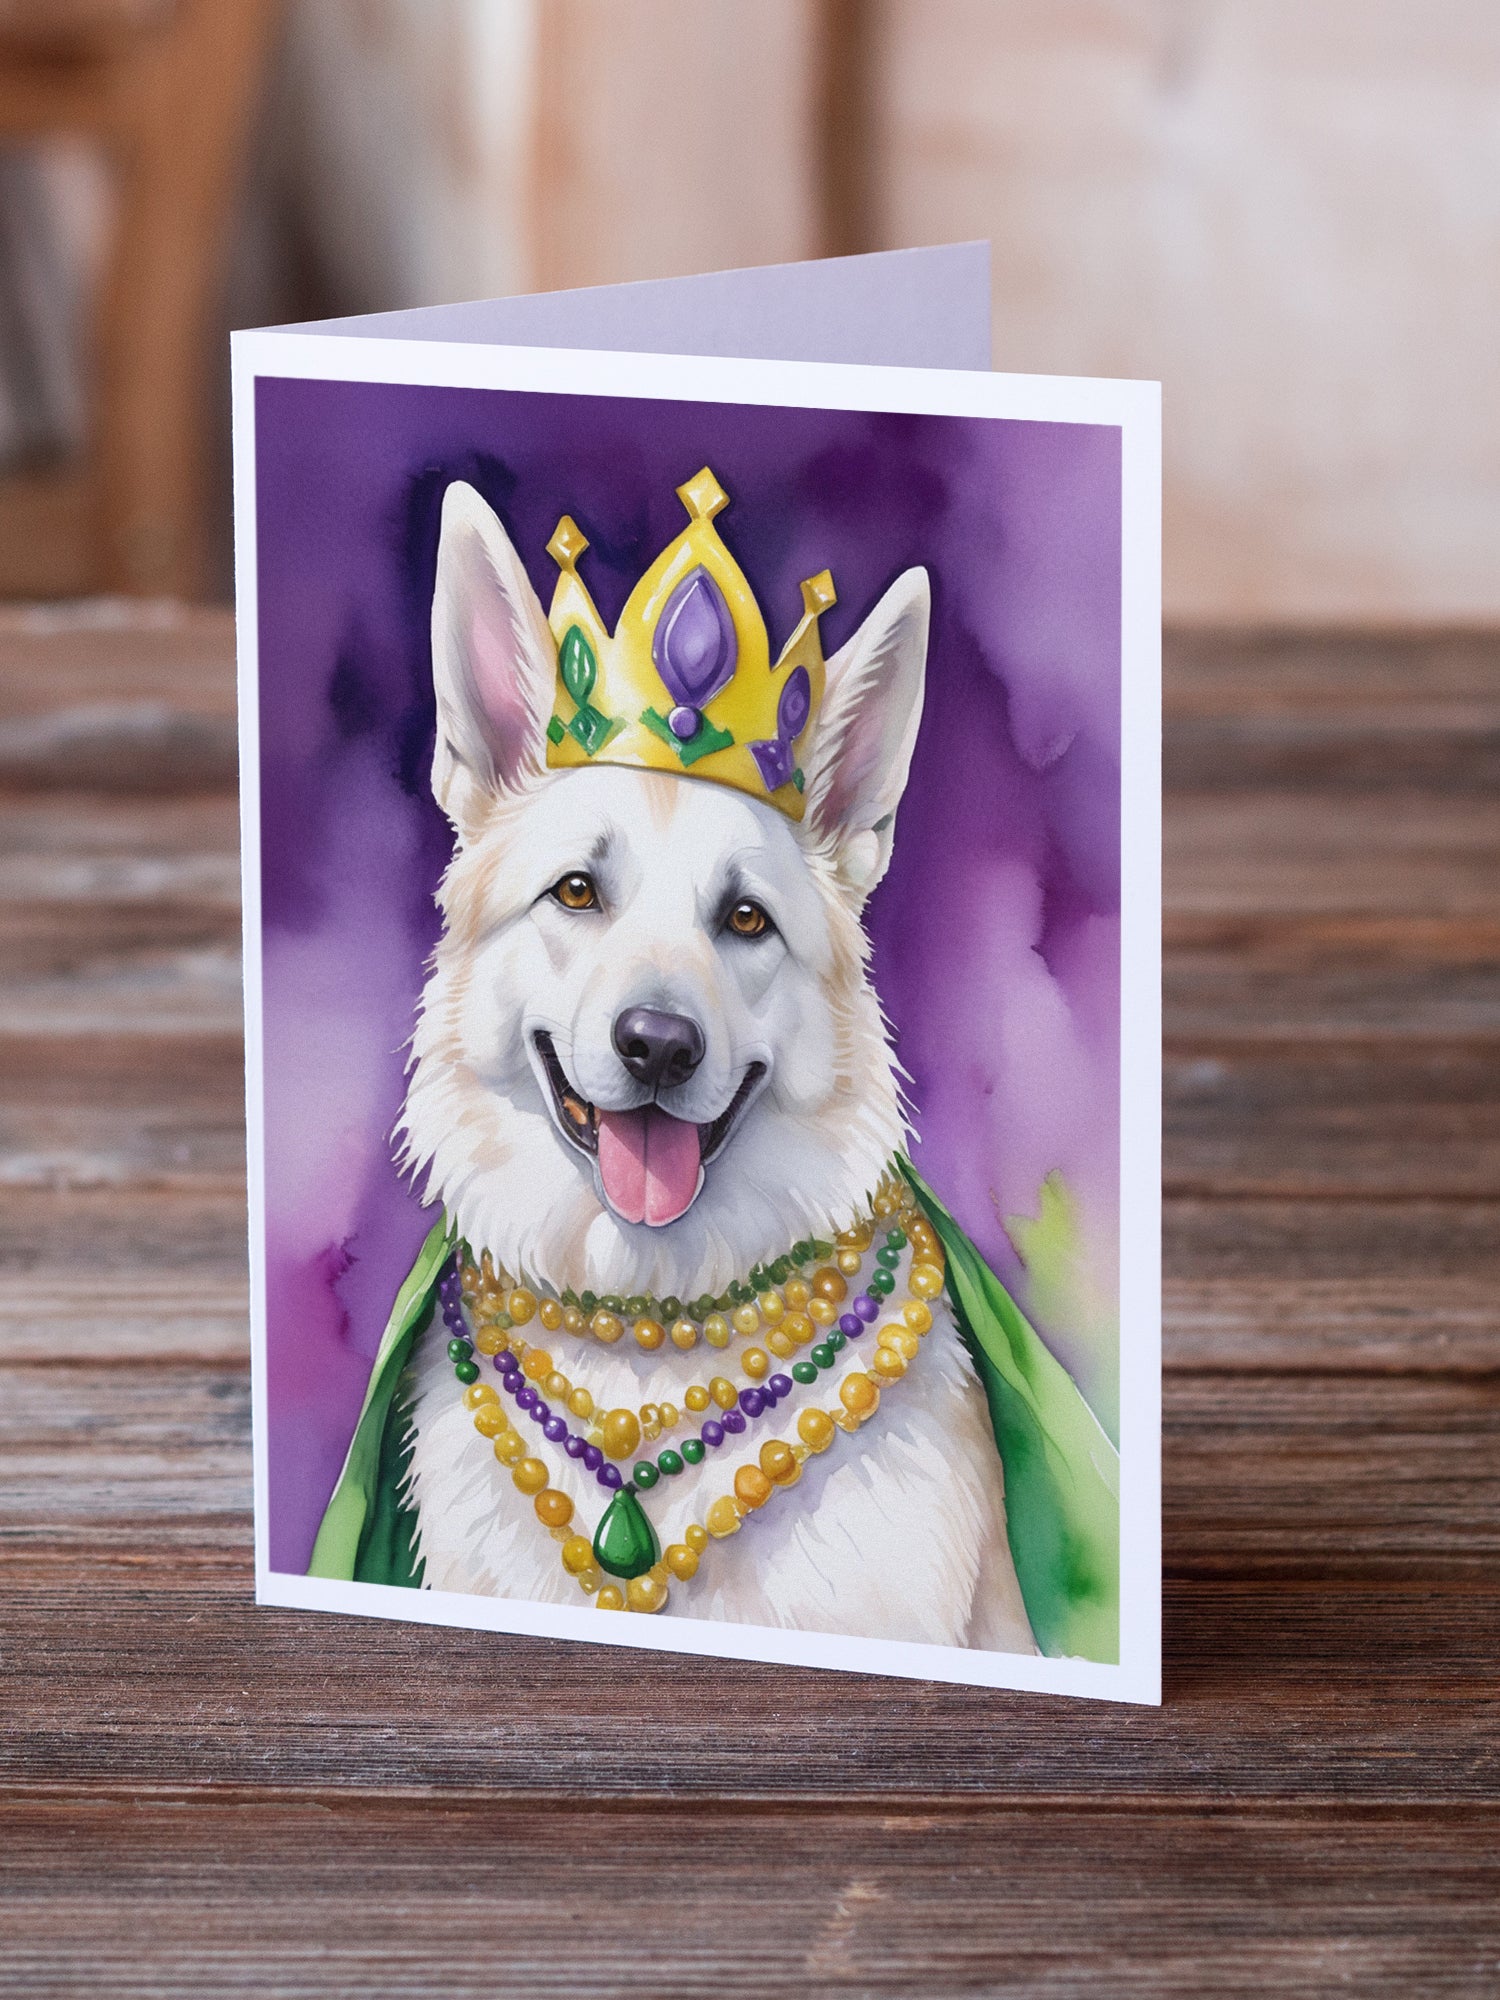 Buy this White German Shepherd King of Mardi Gras Greeting Cards Pack of 8